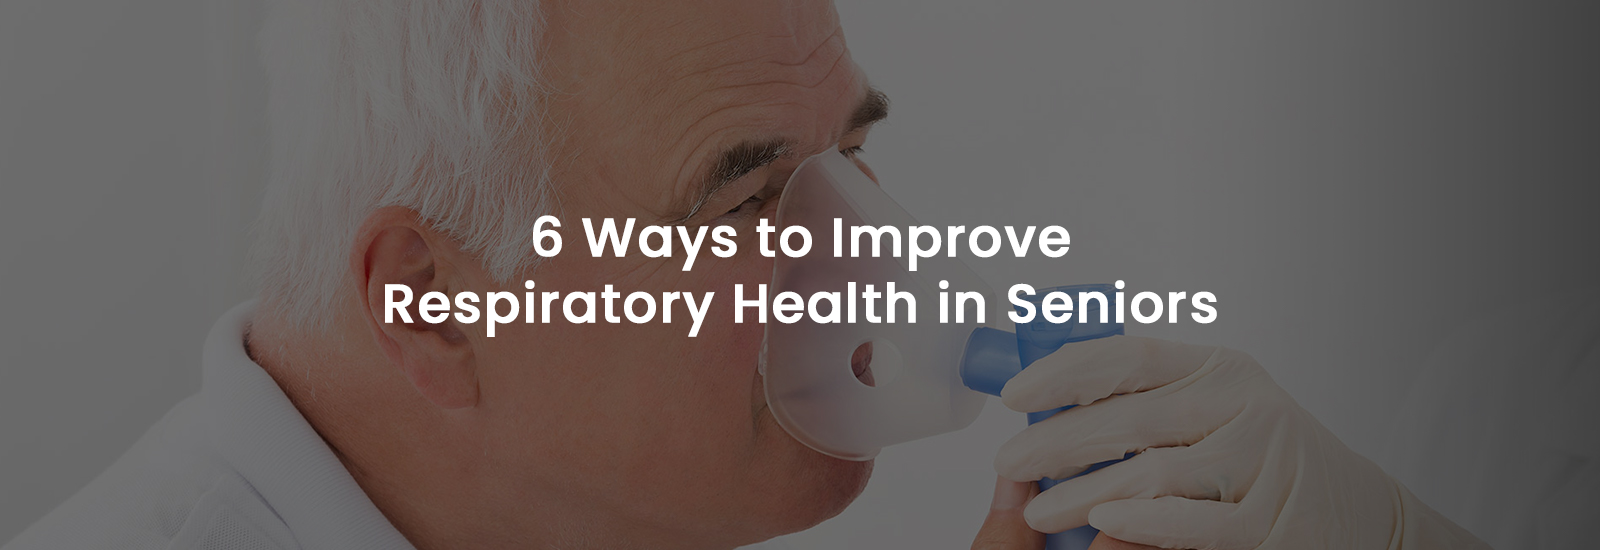 6 Ways to Improve Respiratory Health in Seniors |Banner Image